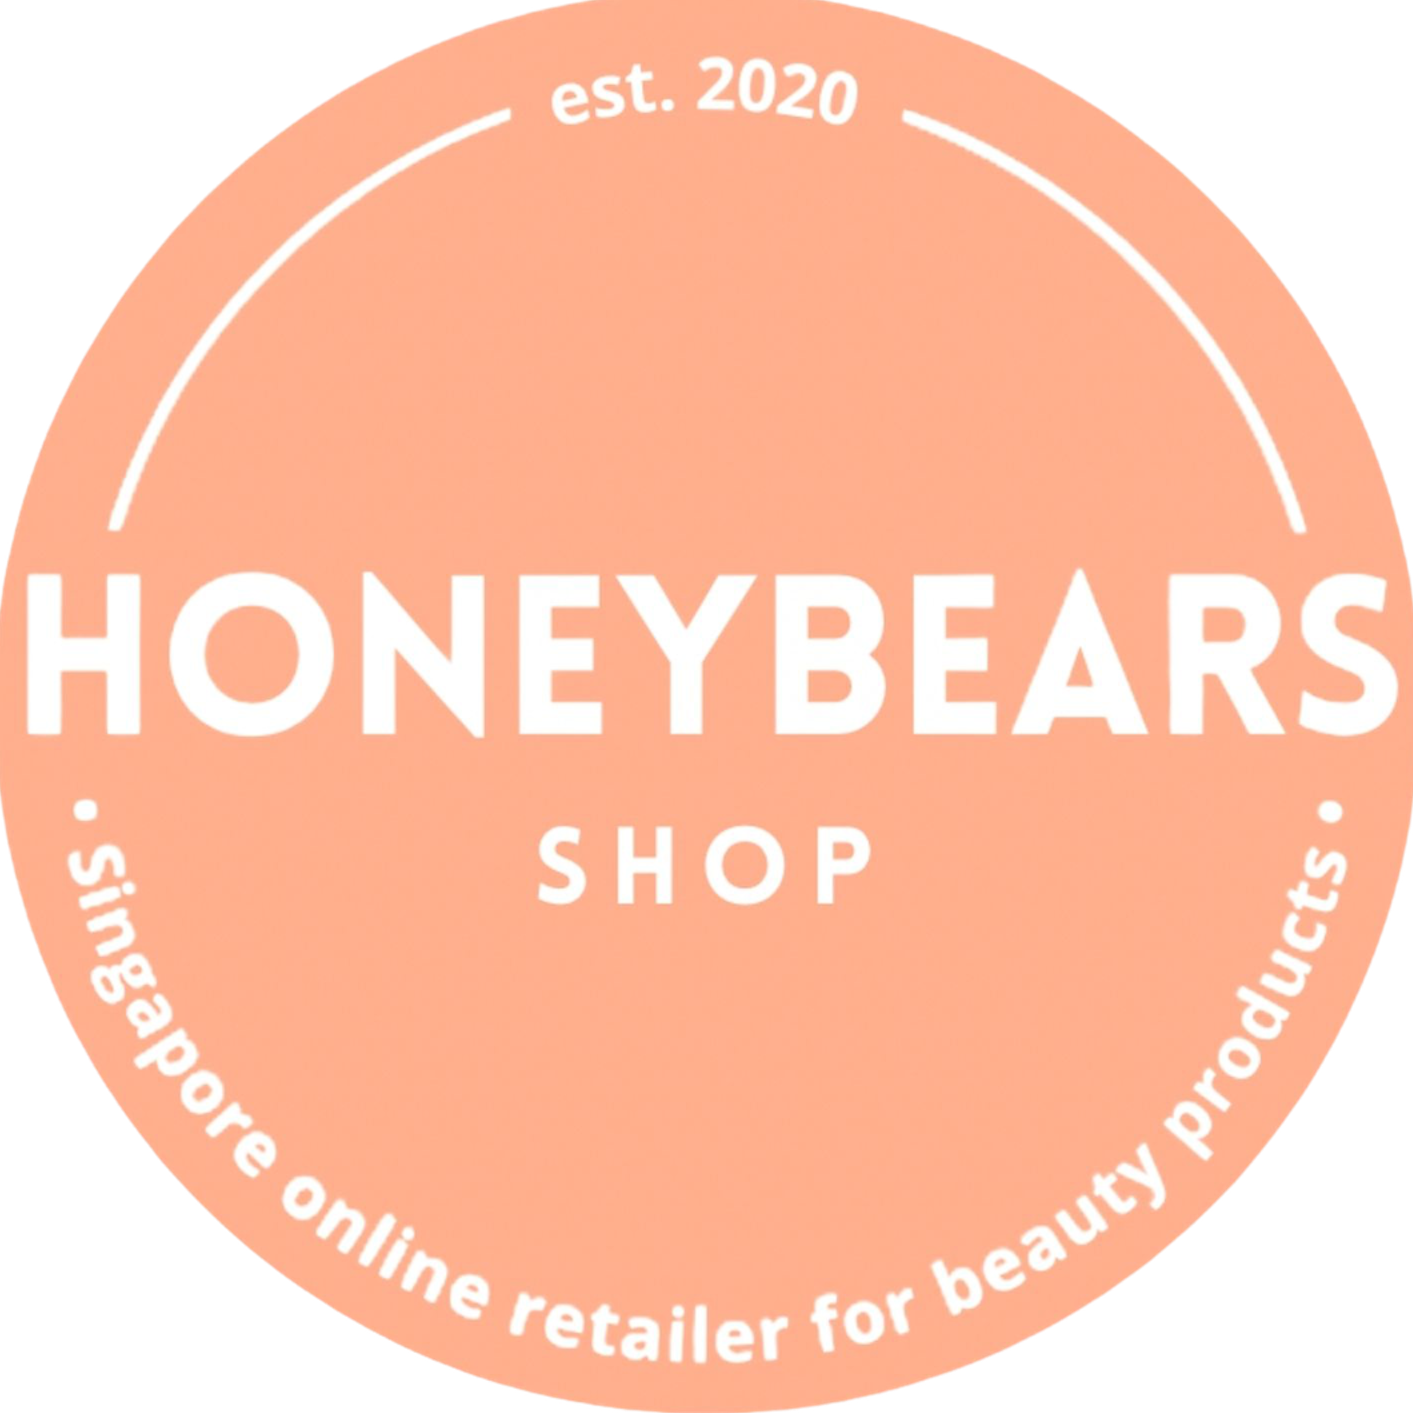 Shop Online With Honeybears Shop Now Visit Honeybears Shop On Lazada